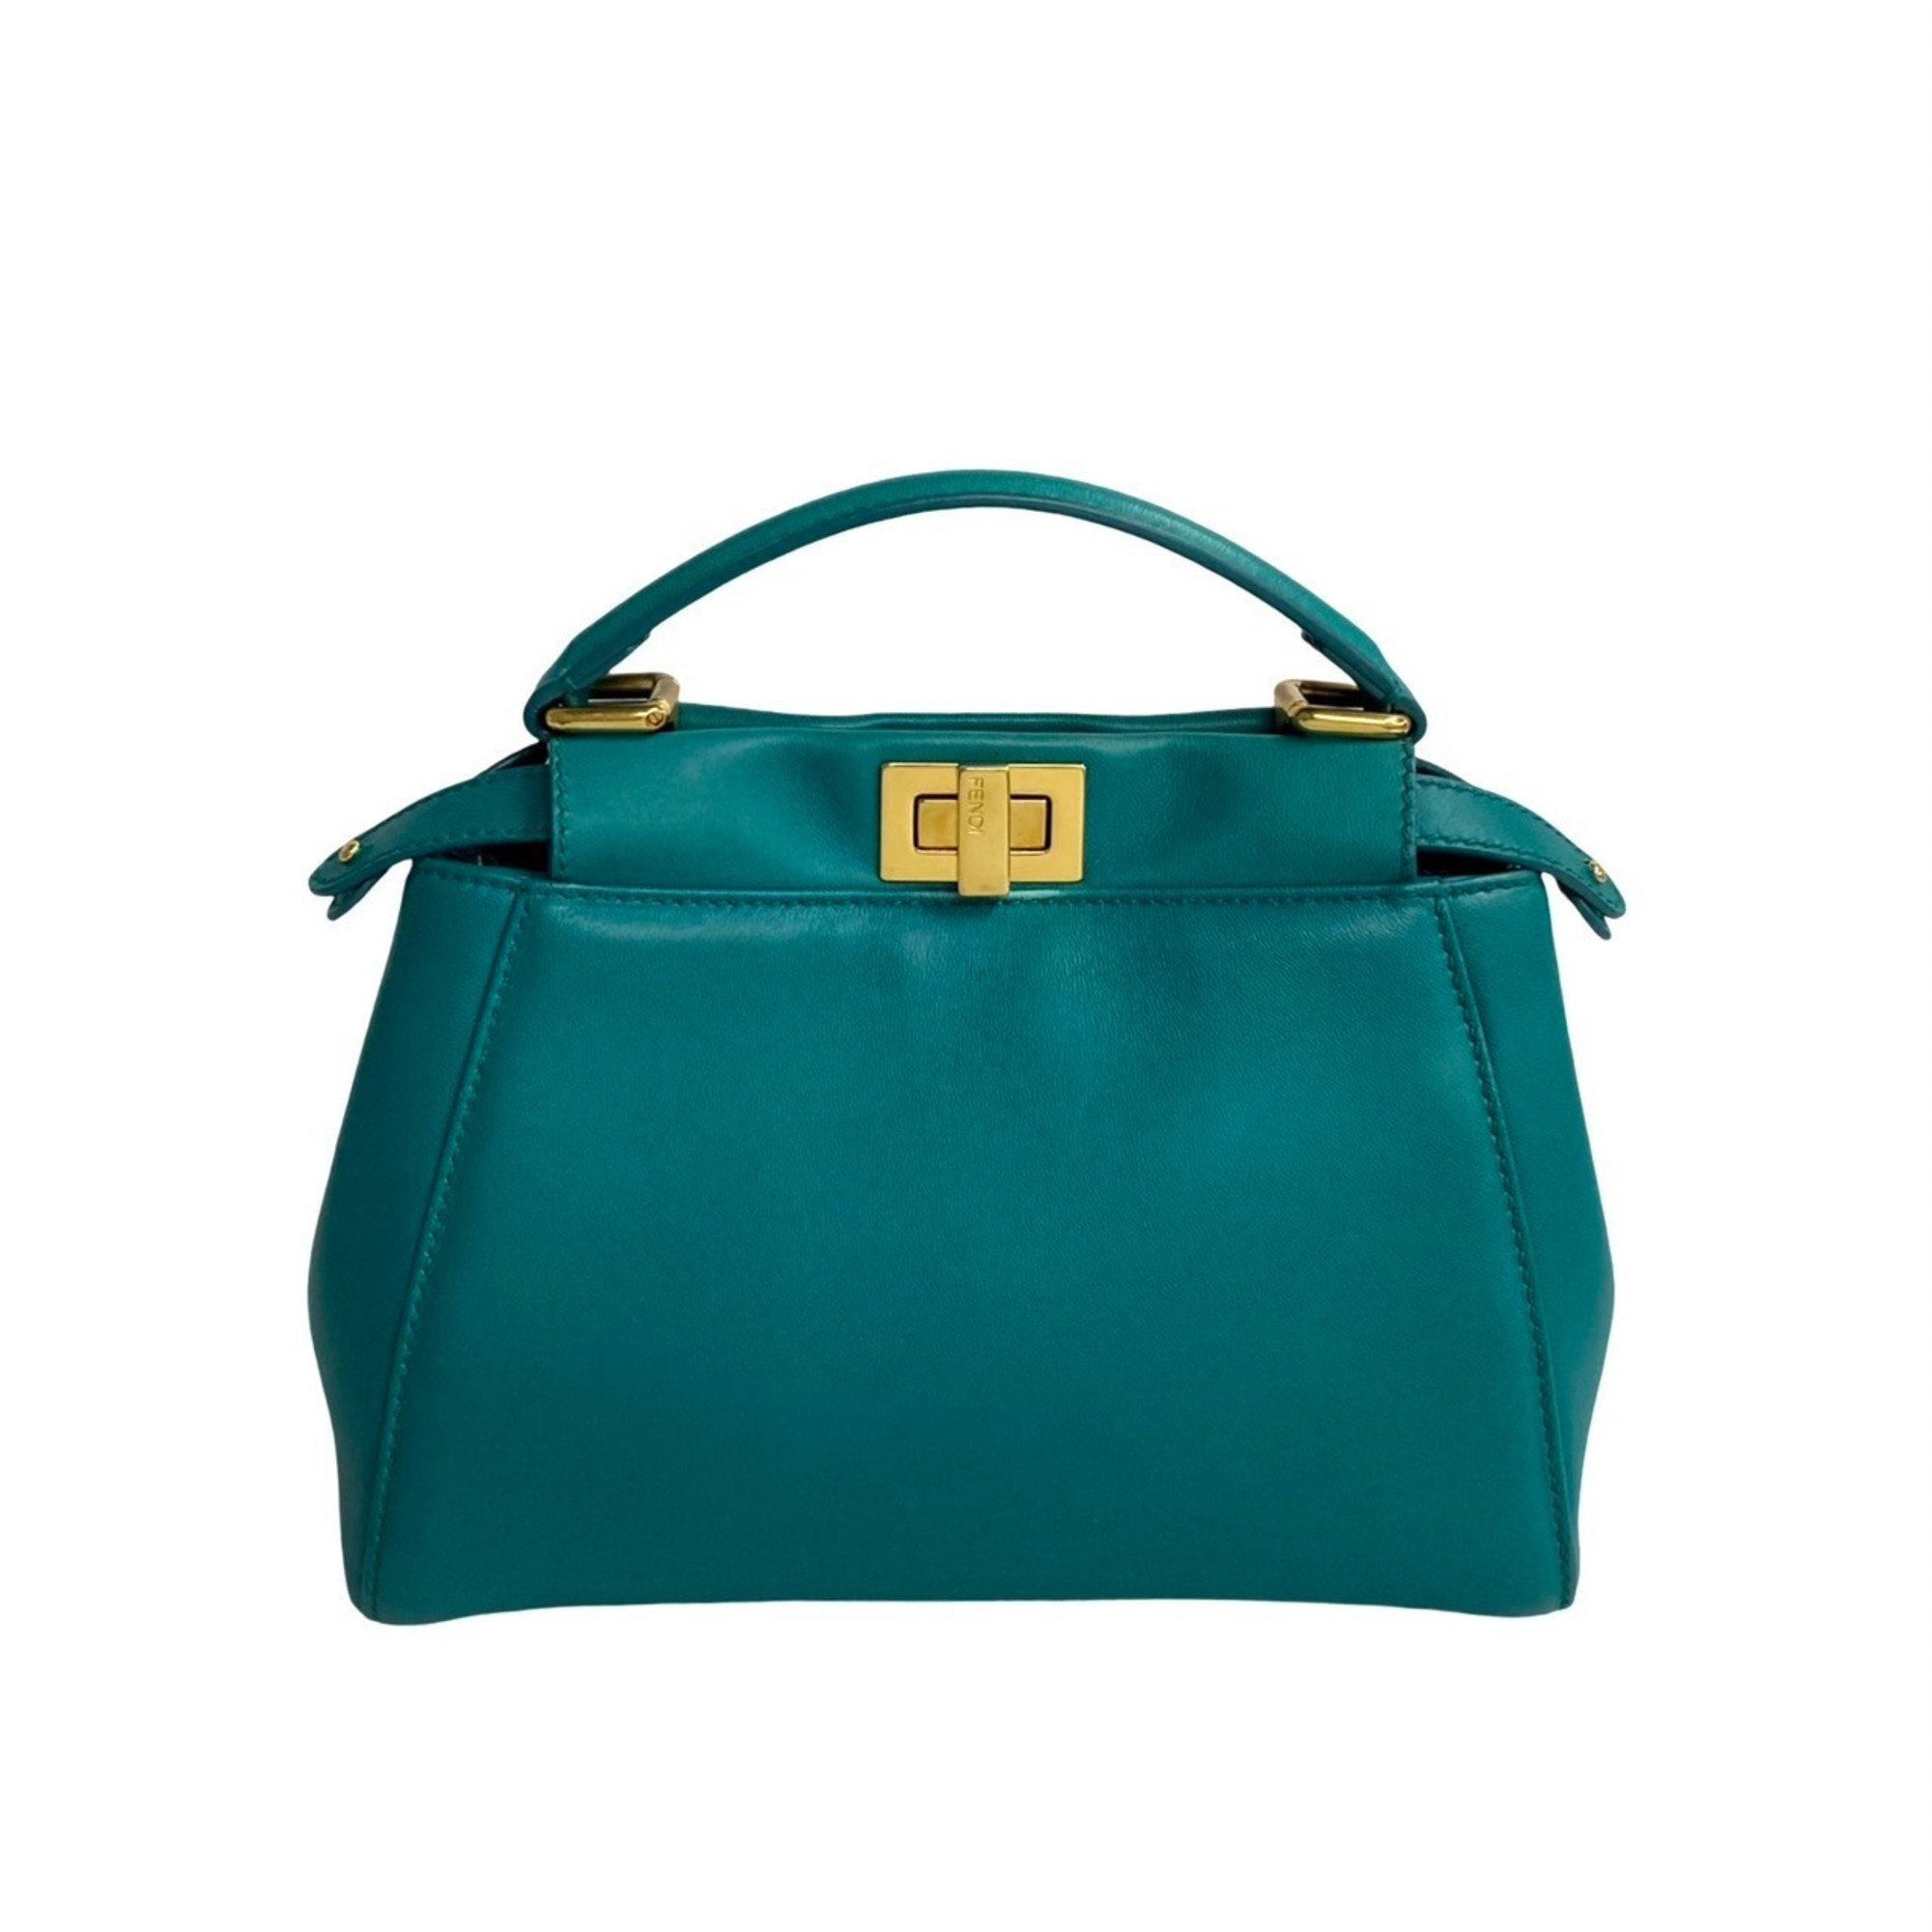 FENDI Peekaboo Leather Turnlock 2way Handbag Shoulder Bag Green 91673